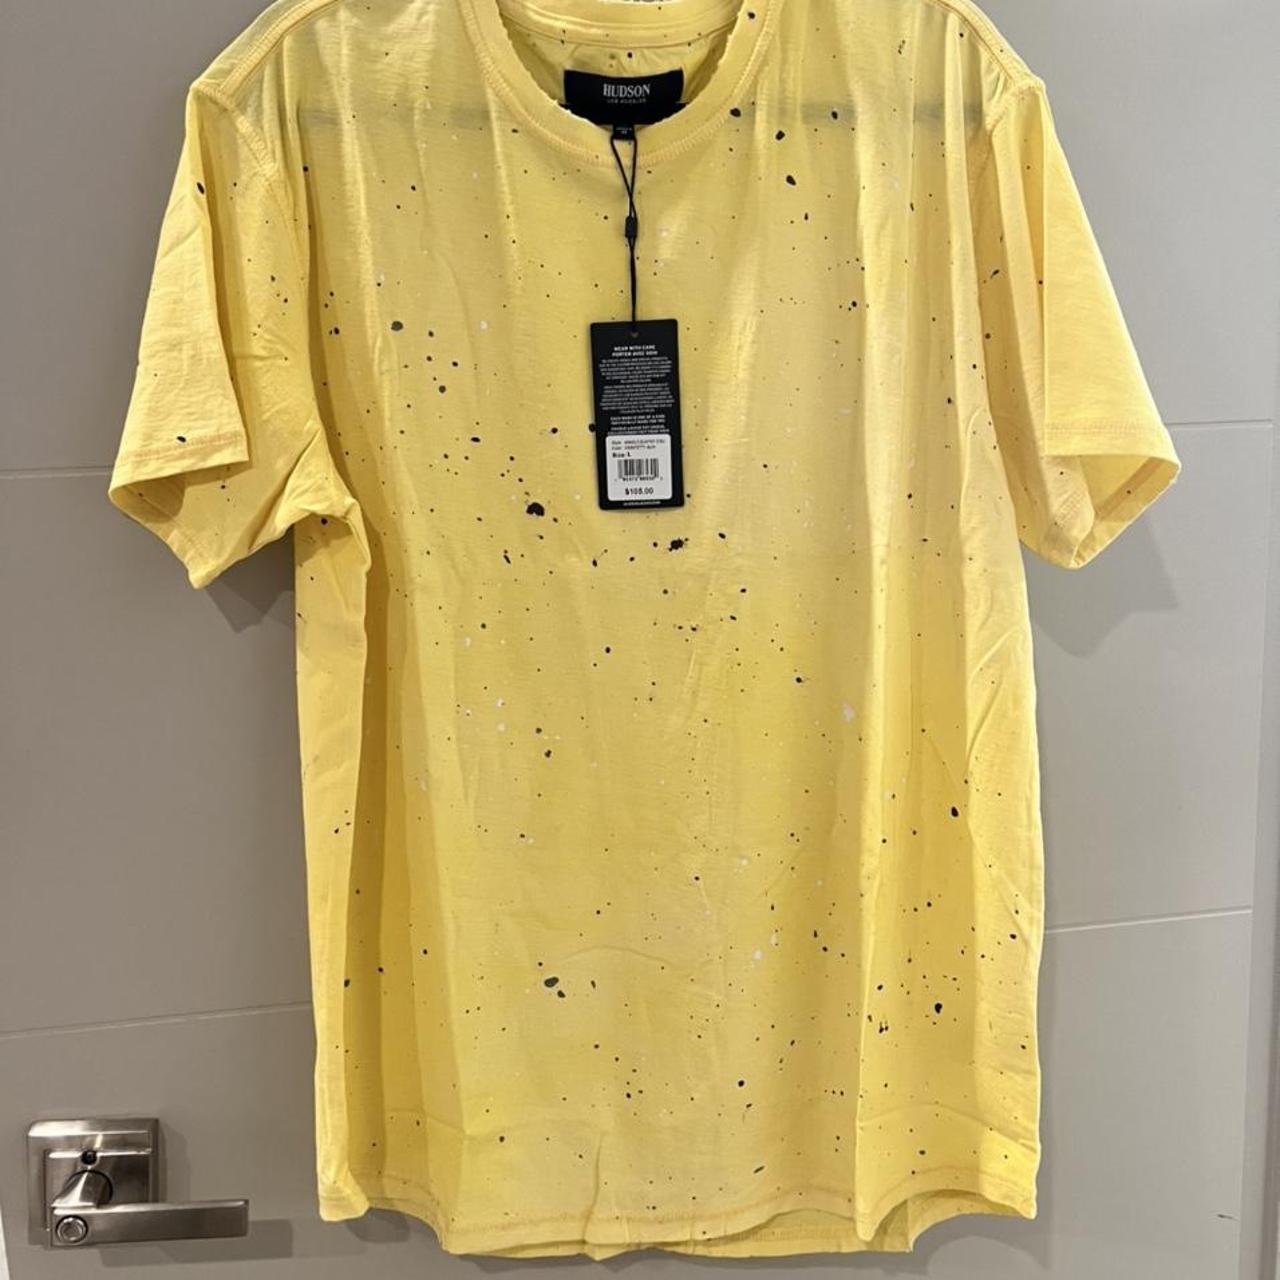 Hudson Jeans Men's Yellow Shirt